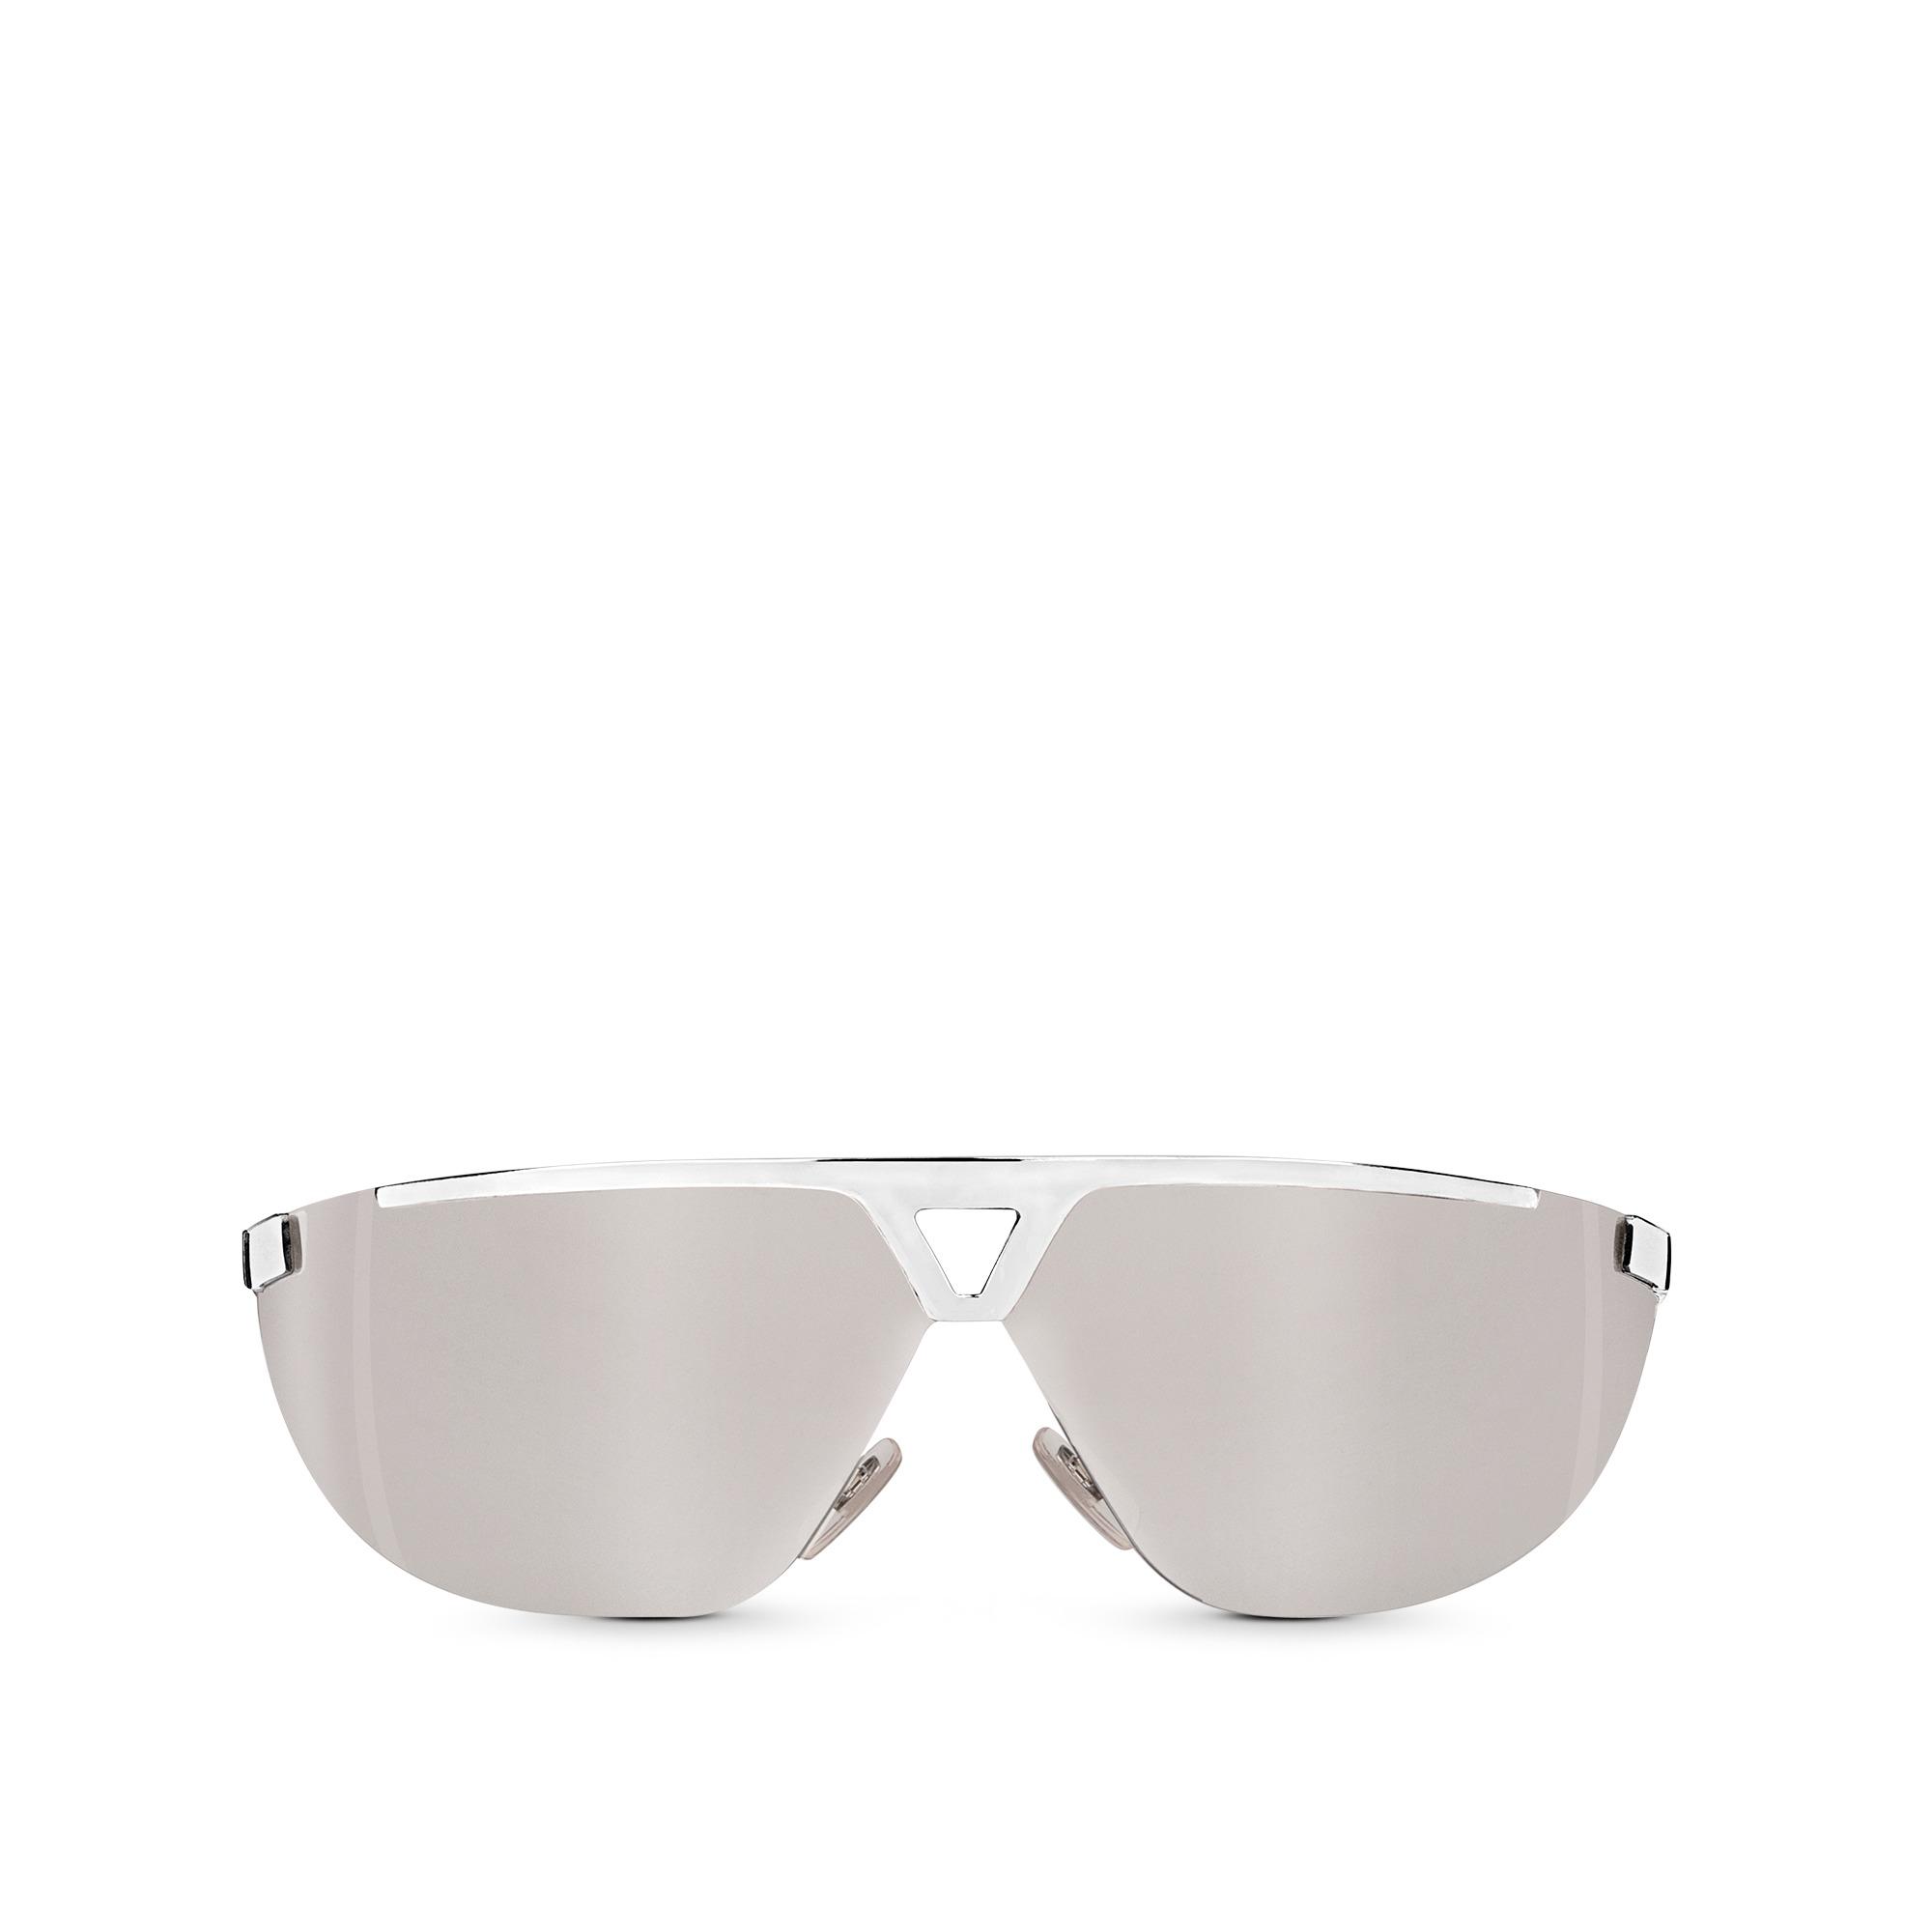 Louis Vuitton 1.1 Evidence Sunglasses, Black, One Size